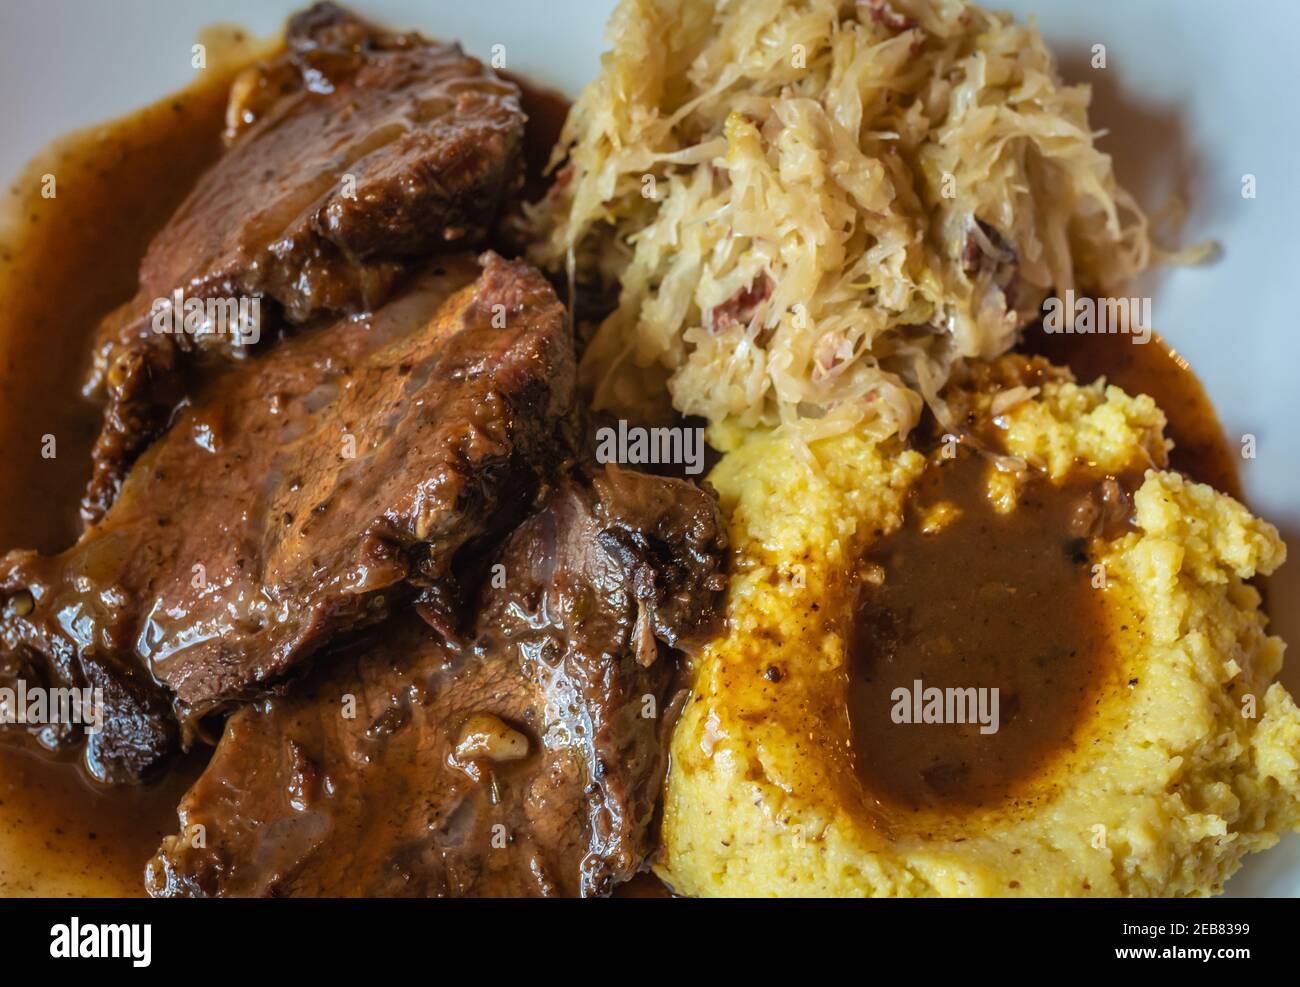 pork ribs with polenta and sauerkraut. Typical Trentino dish - italian cuisine Stock Photo